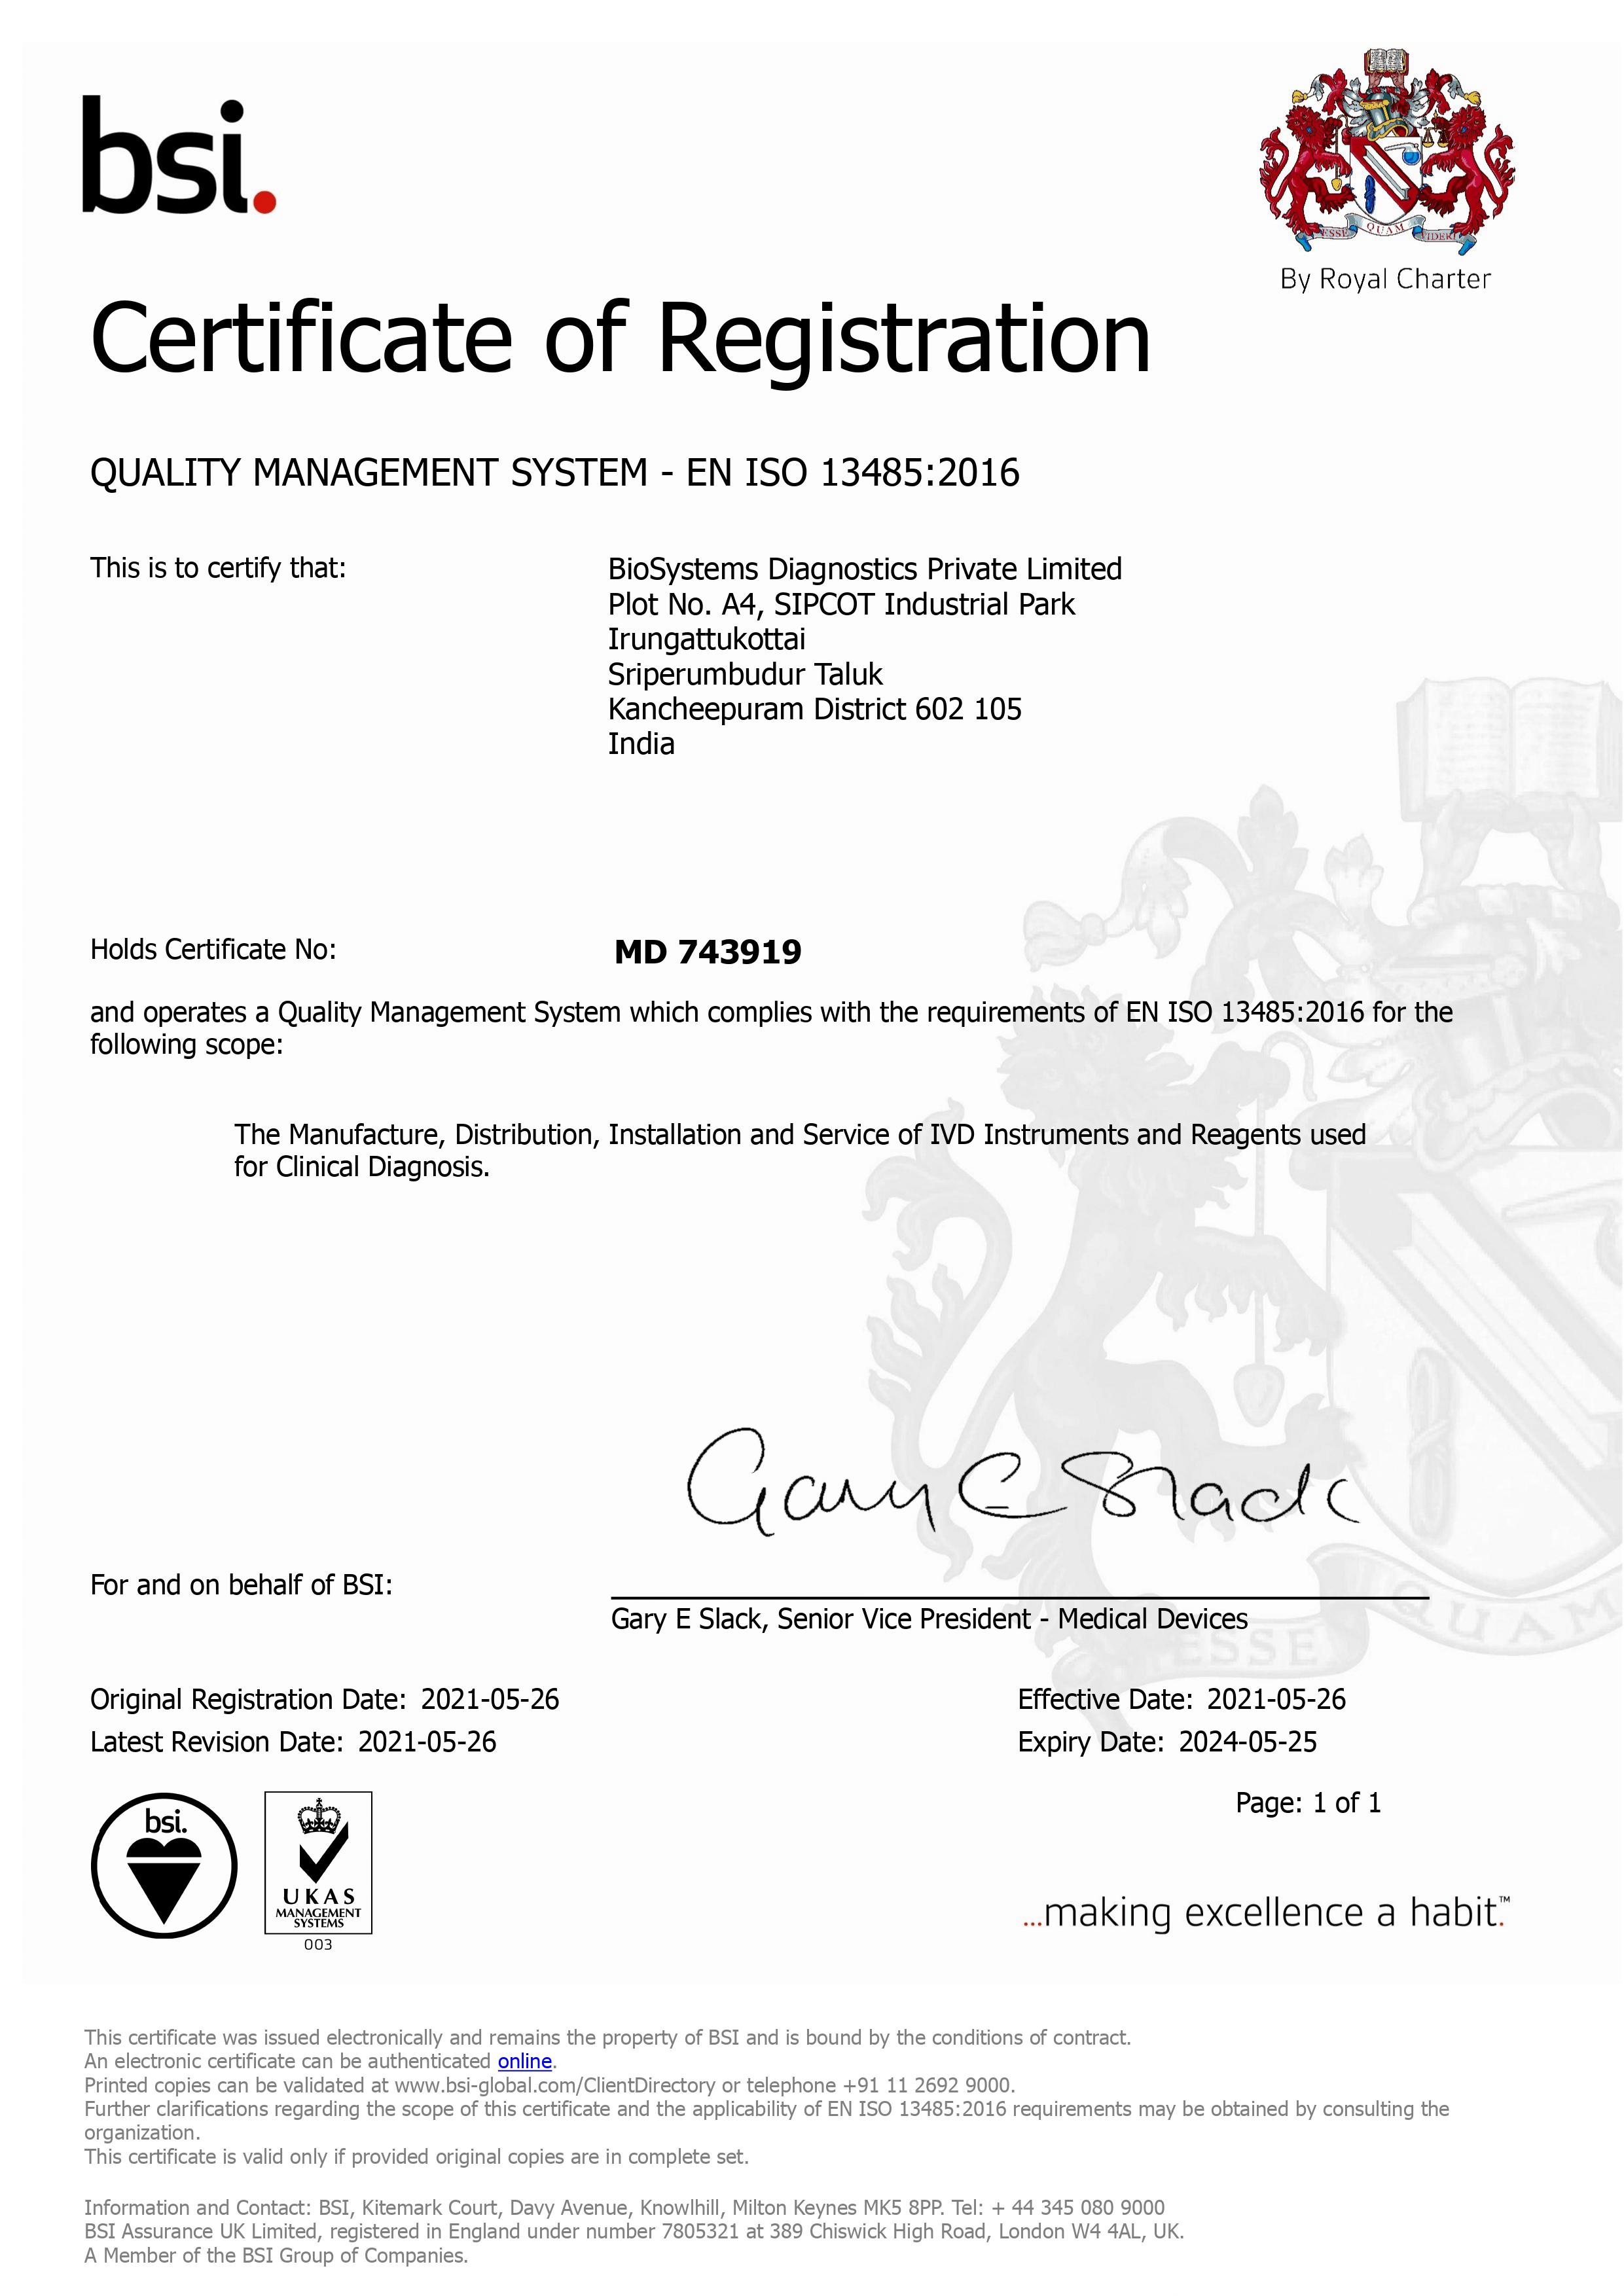 bsilogo-certificate